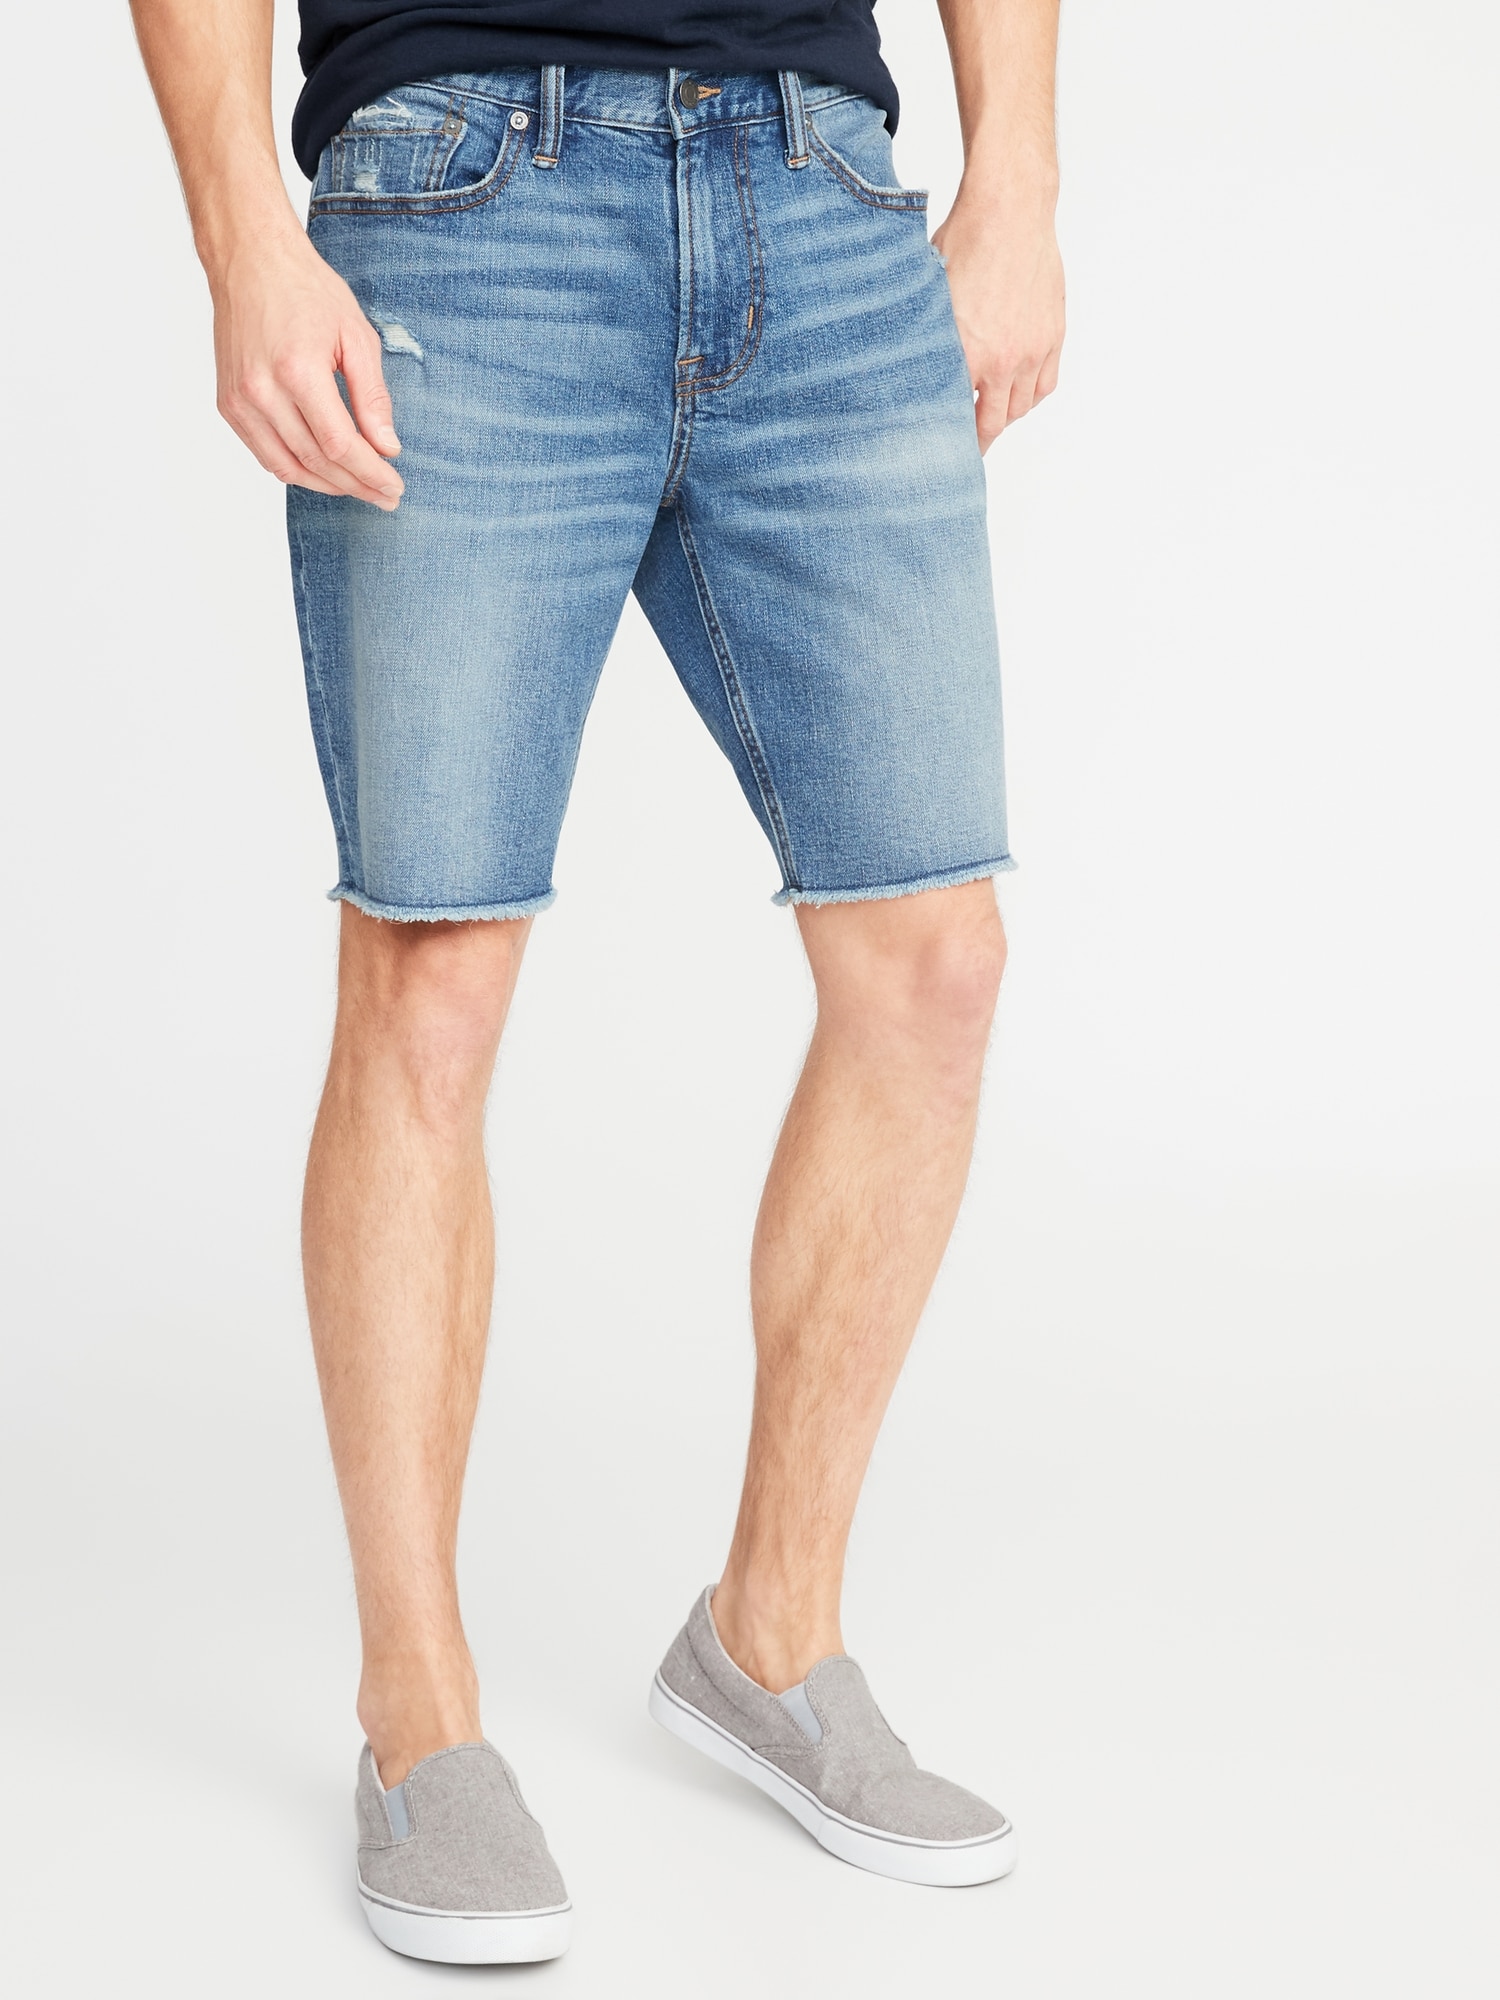 Slim Built-In Flex Distressed Cut-Off Jean Shorts